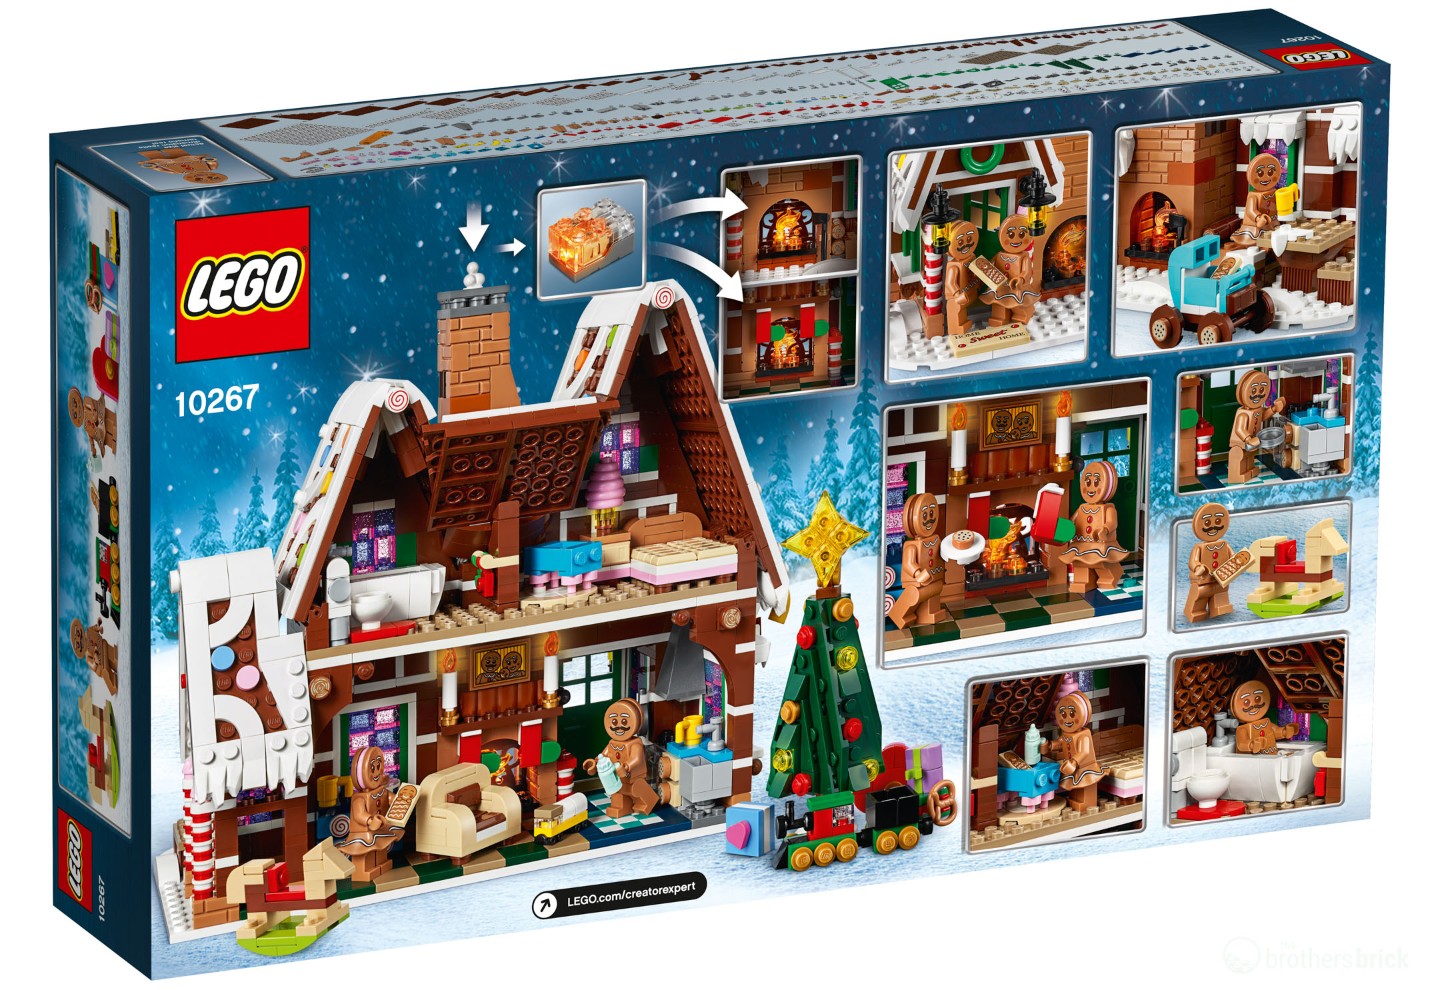 LEGO-Creator-Expert-Winter-Village-10267-Gingerbread-House-4.jpg